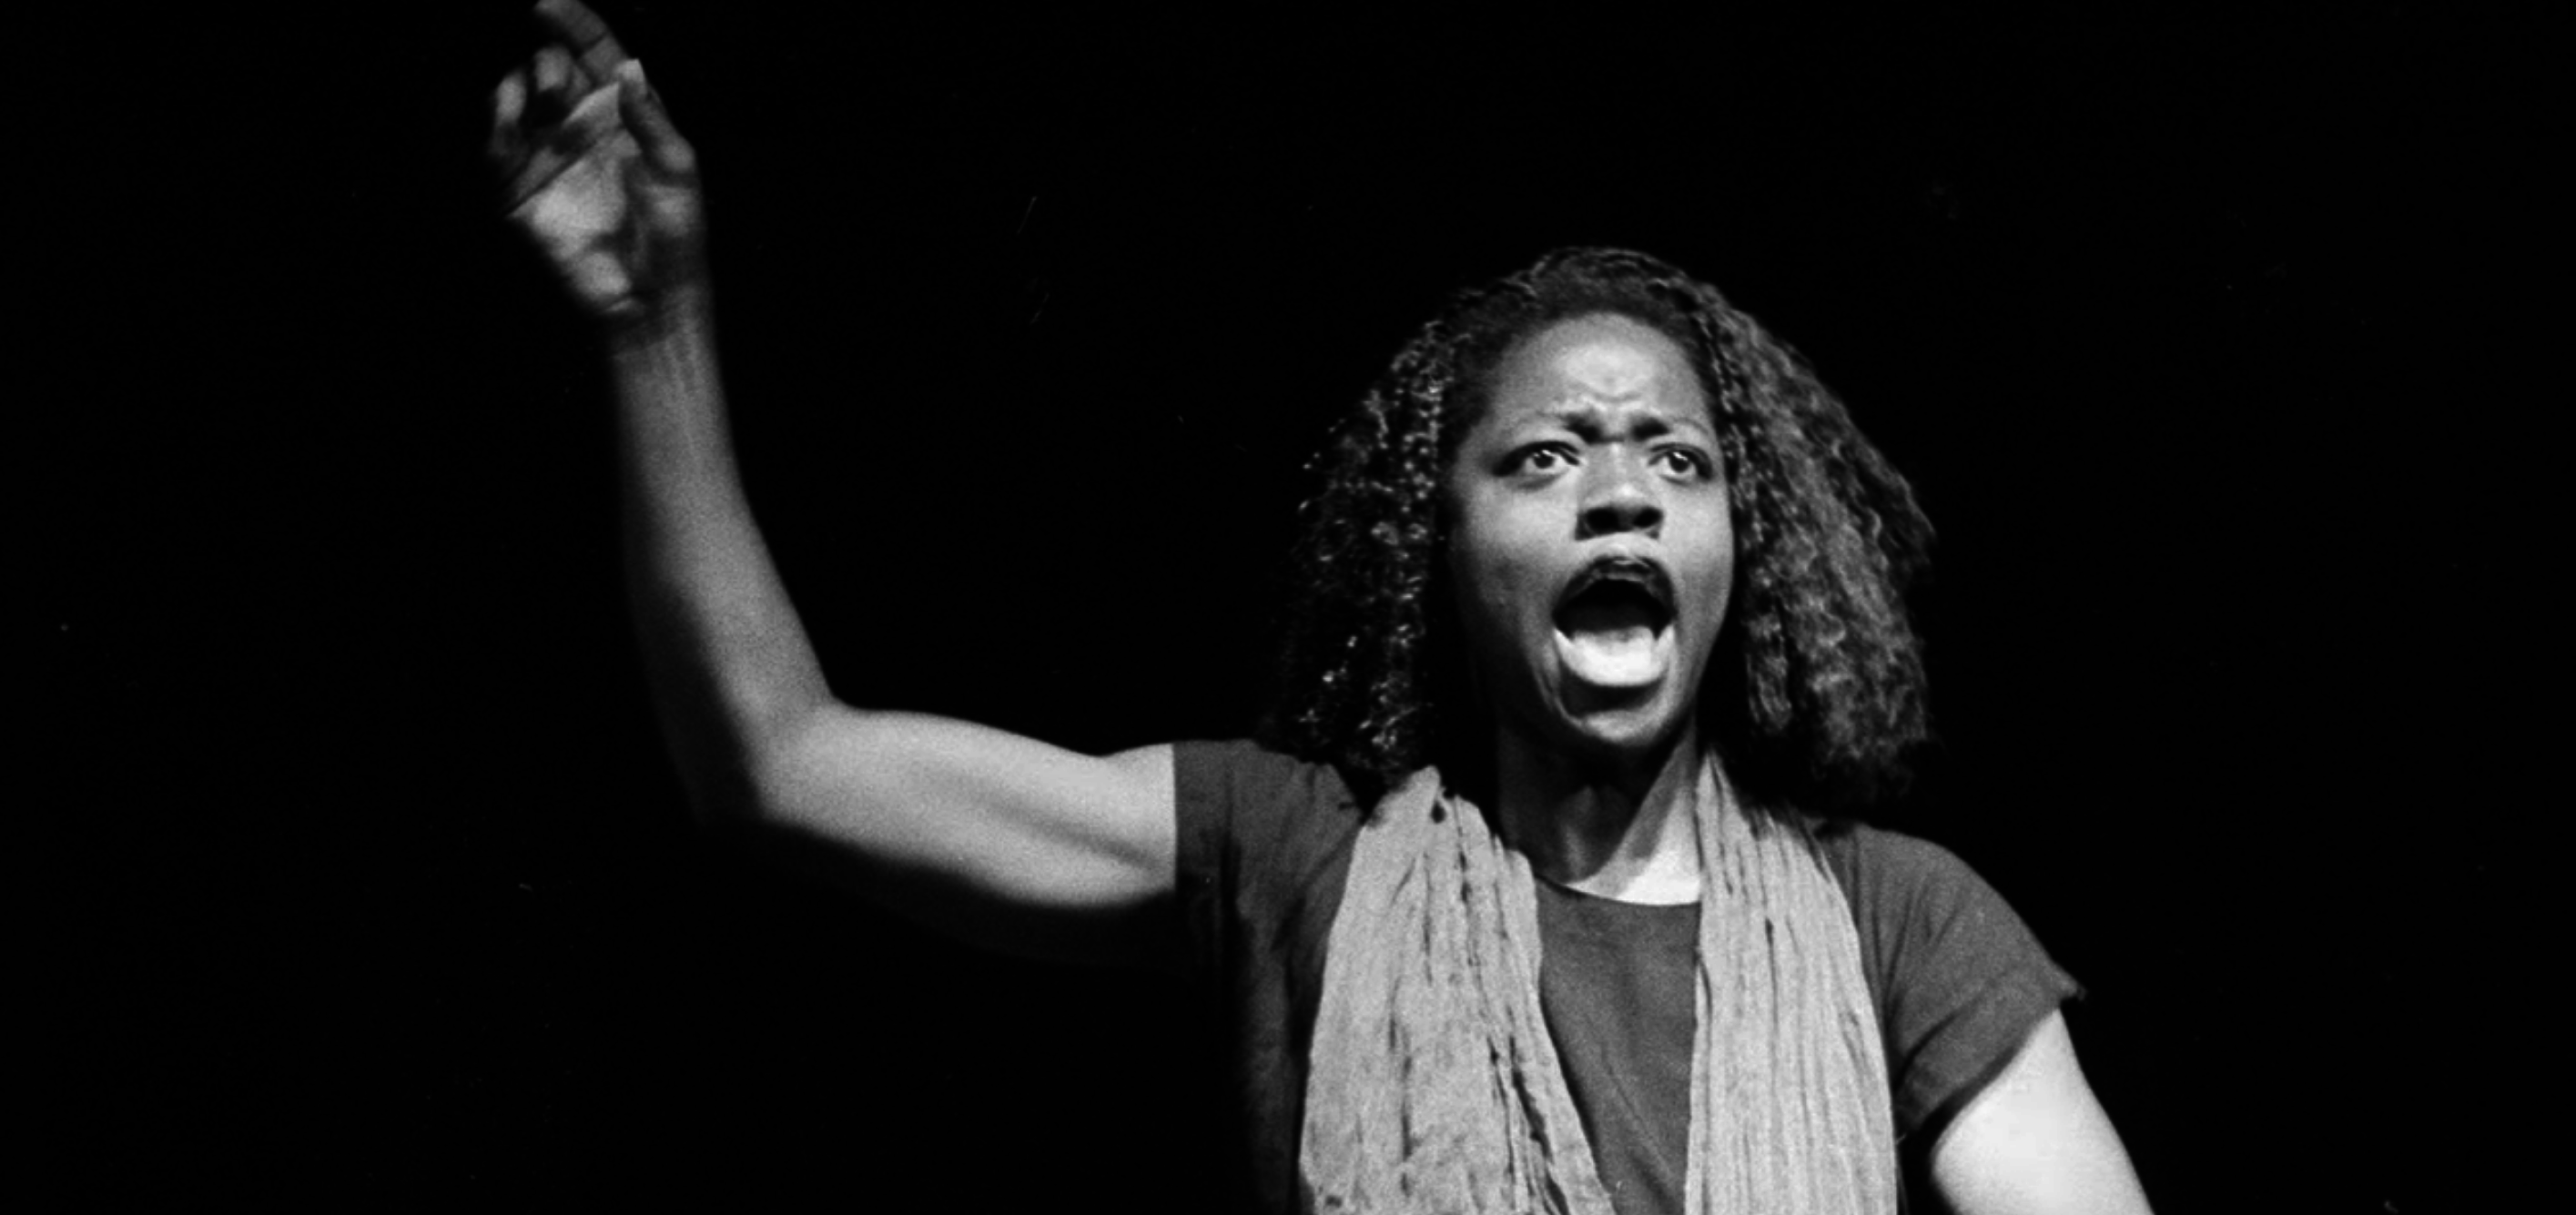 Viola Davis onstage in character